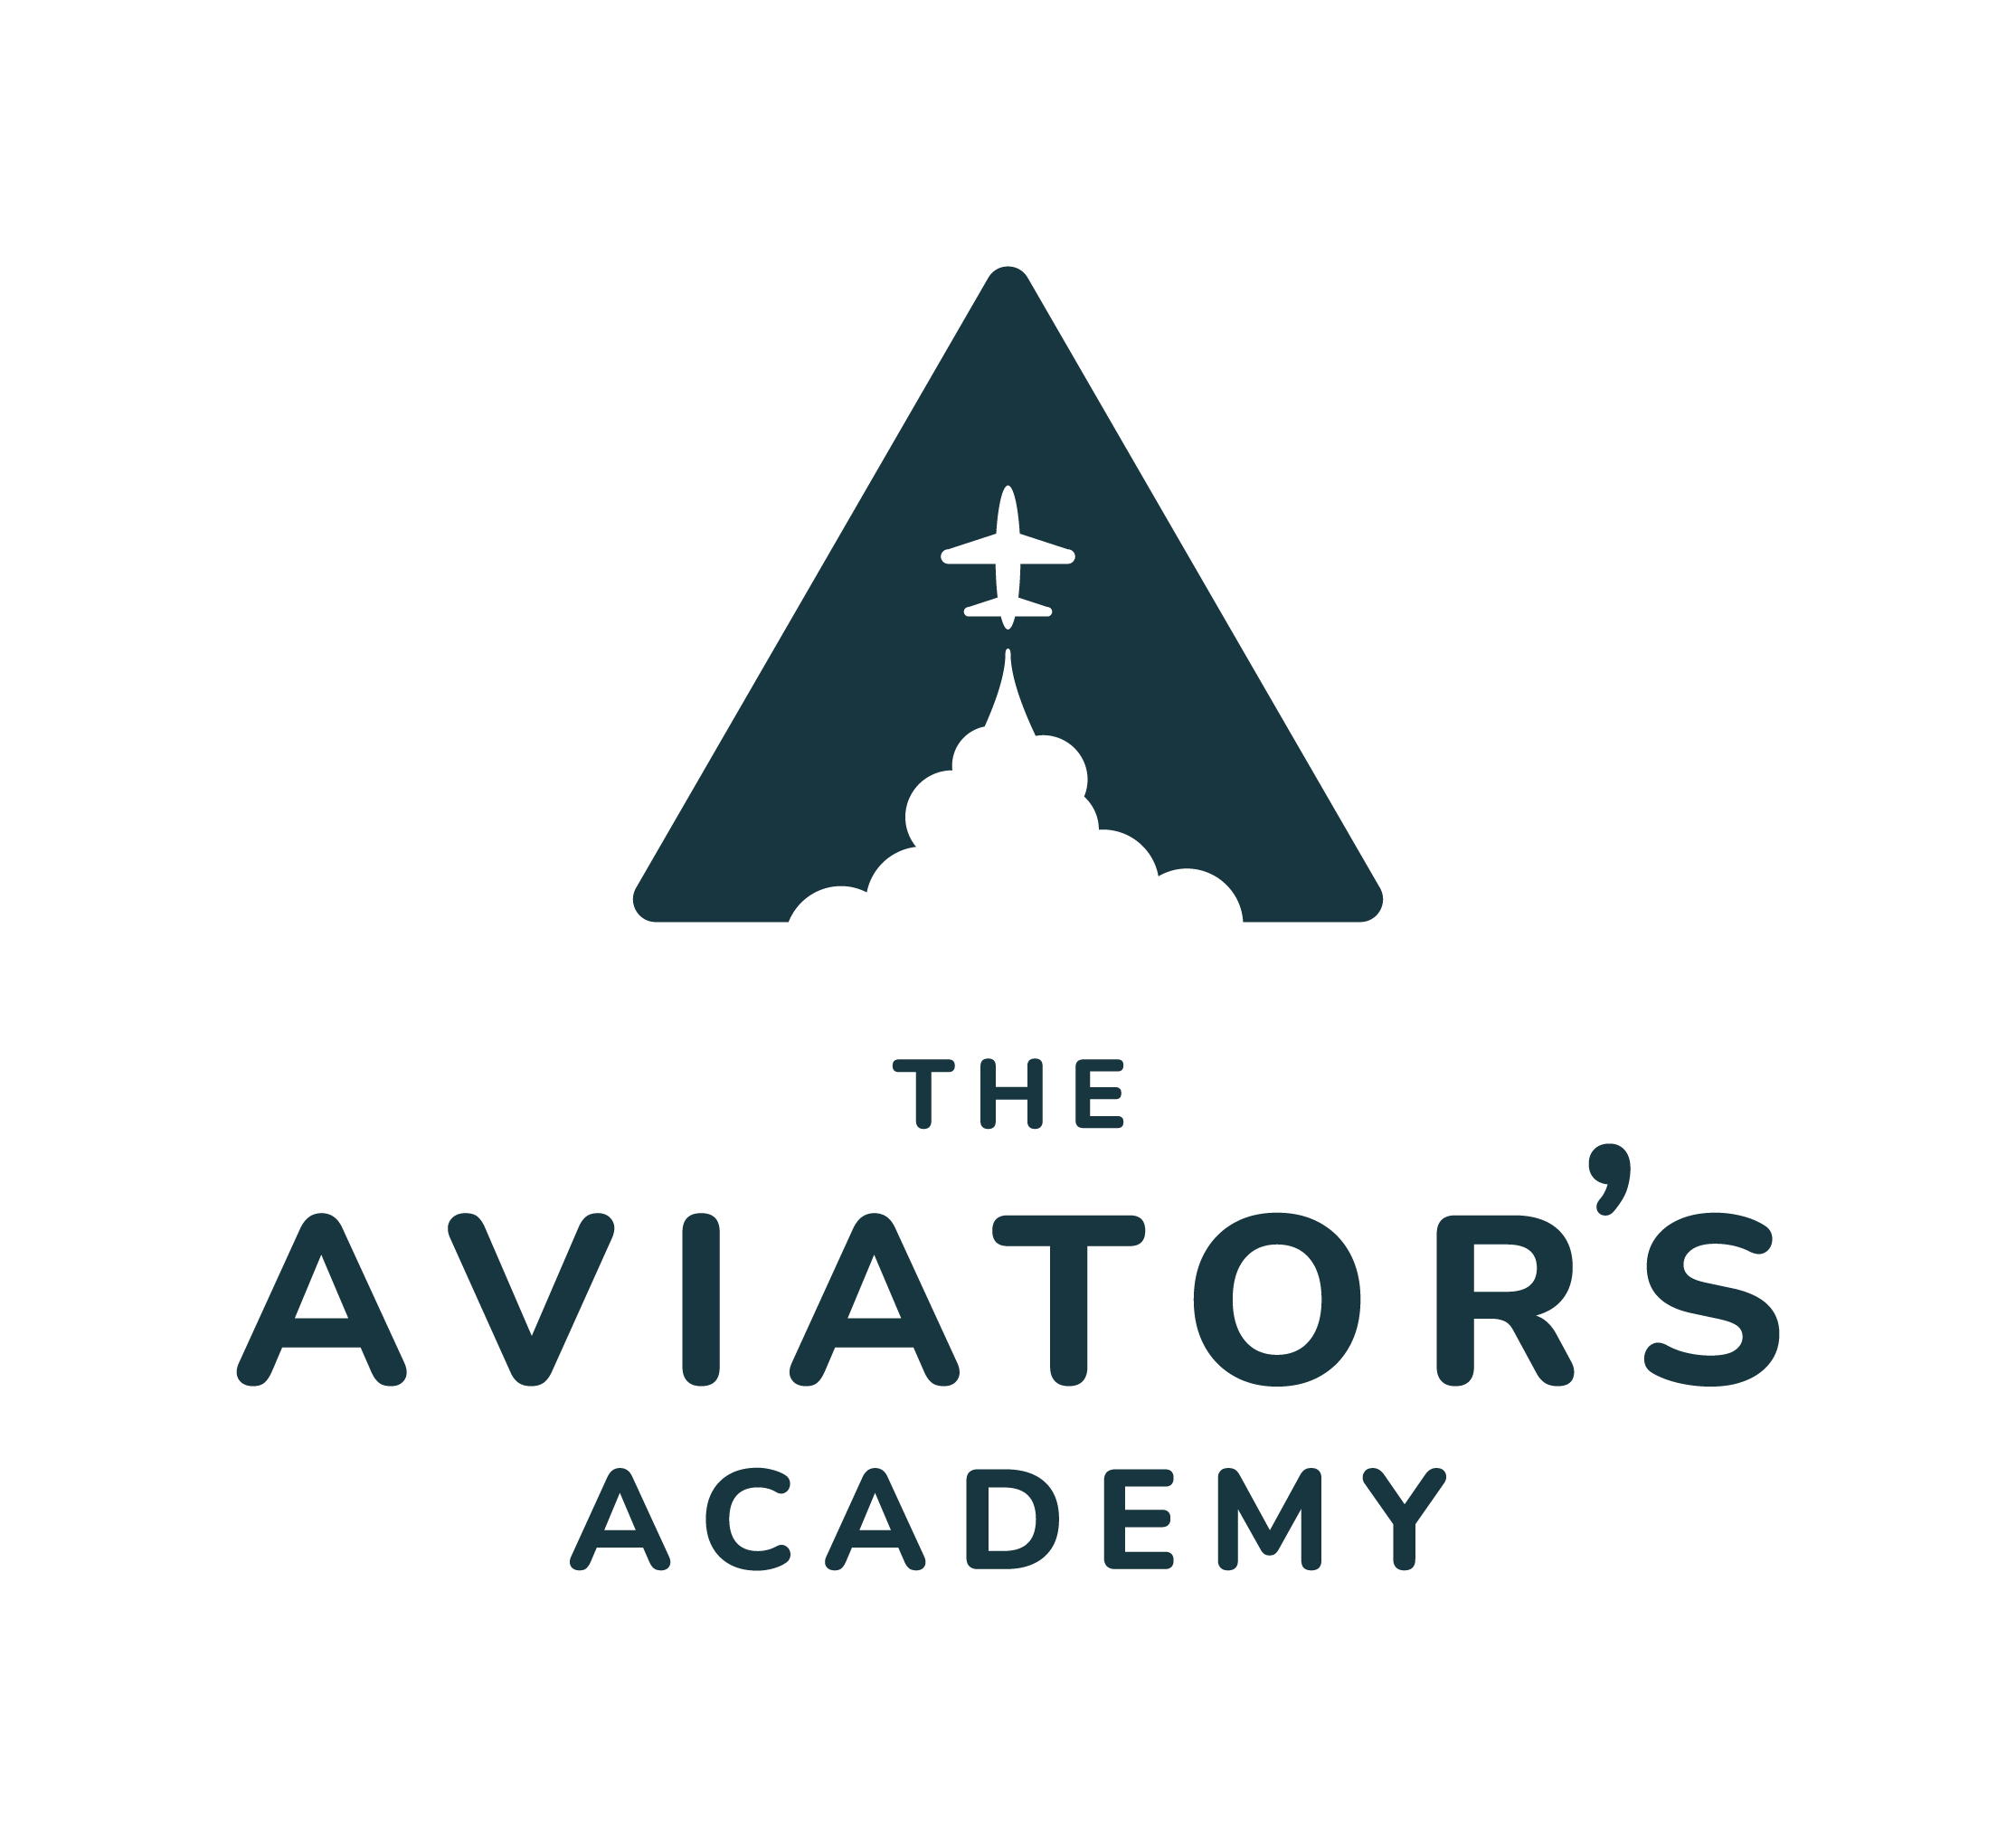 The Aviator's Academy logo